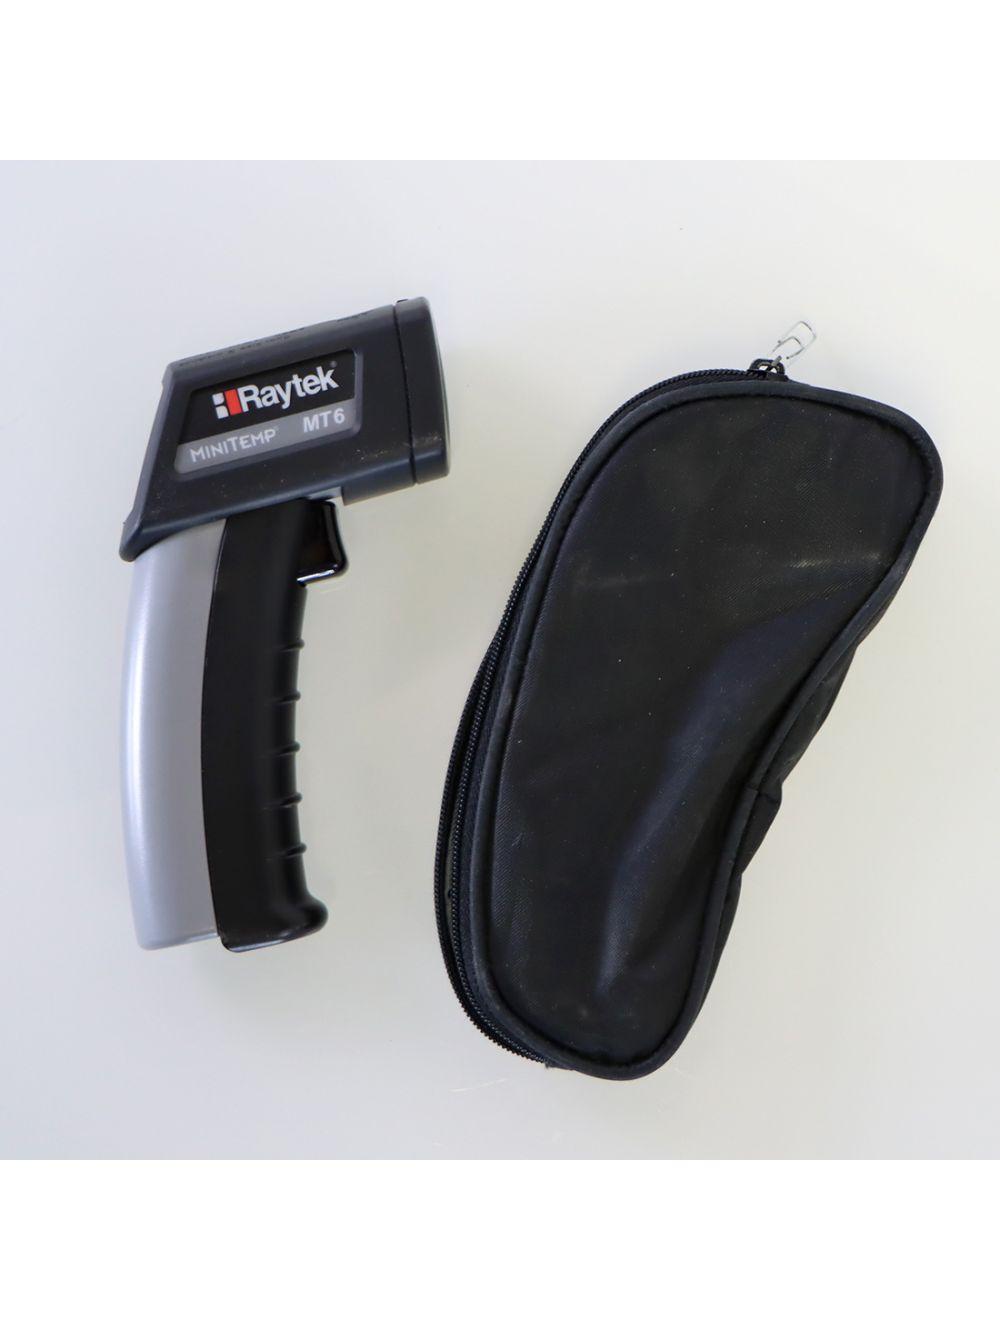 Raytek MiniTemp Laser Thermometer Handheld 0-750 F MT6 Mini Temp IR Infrared